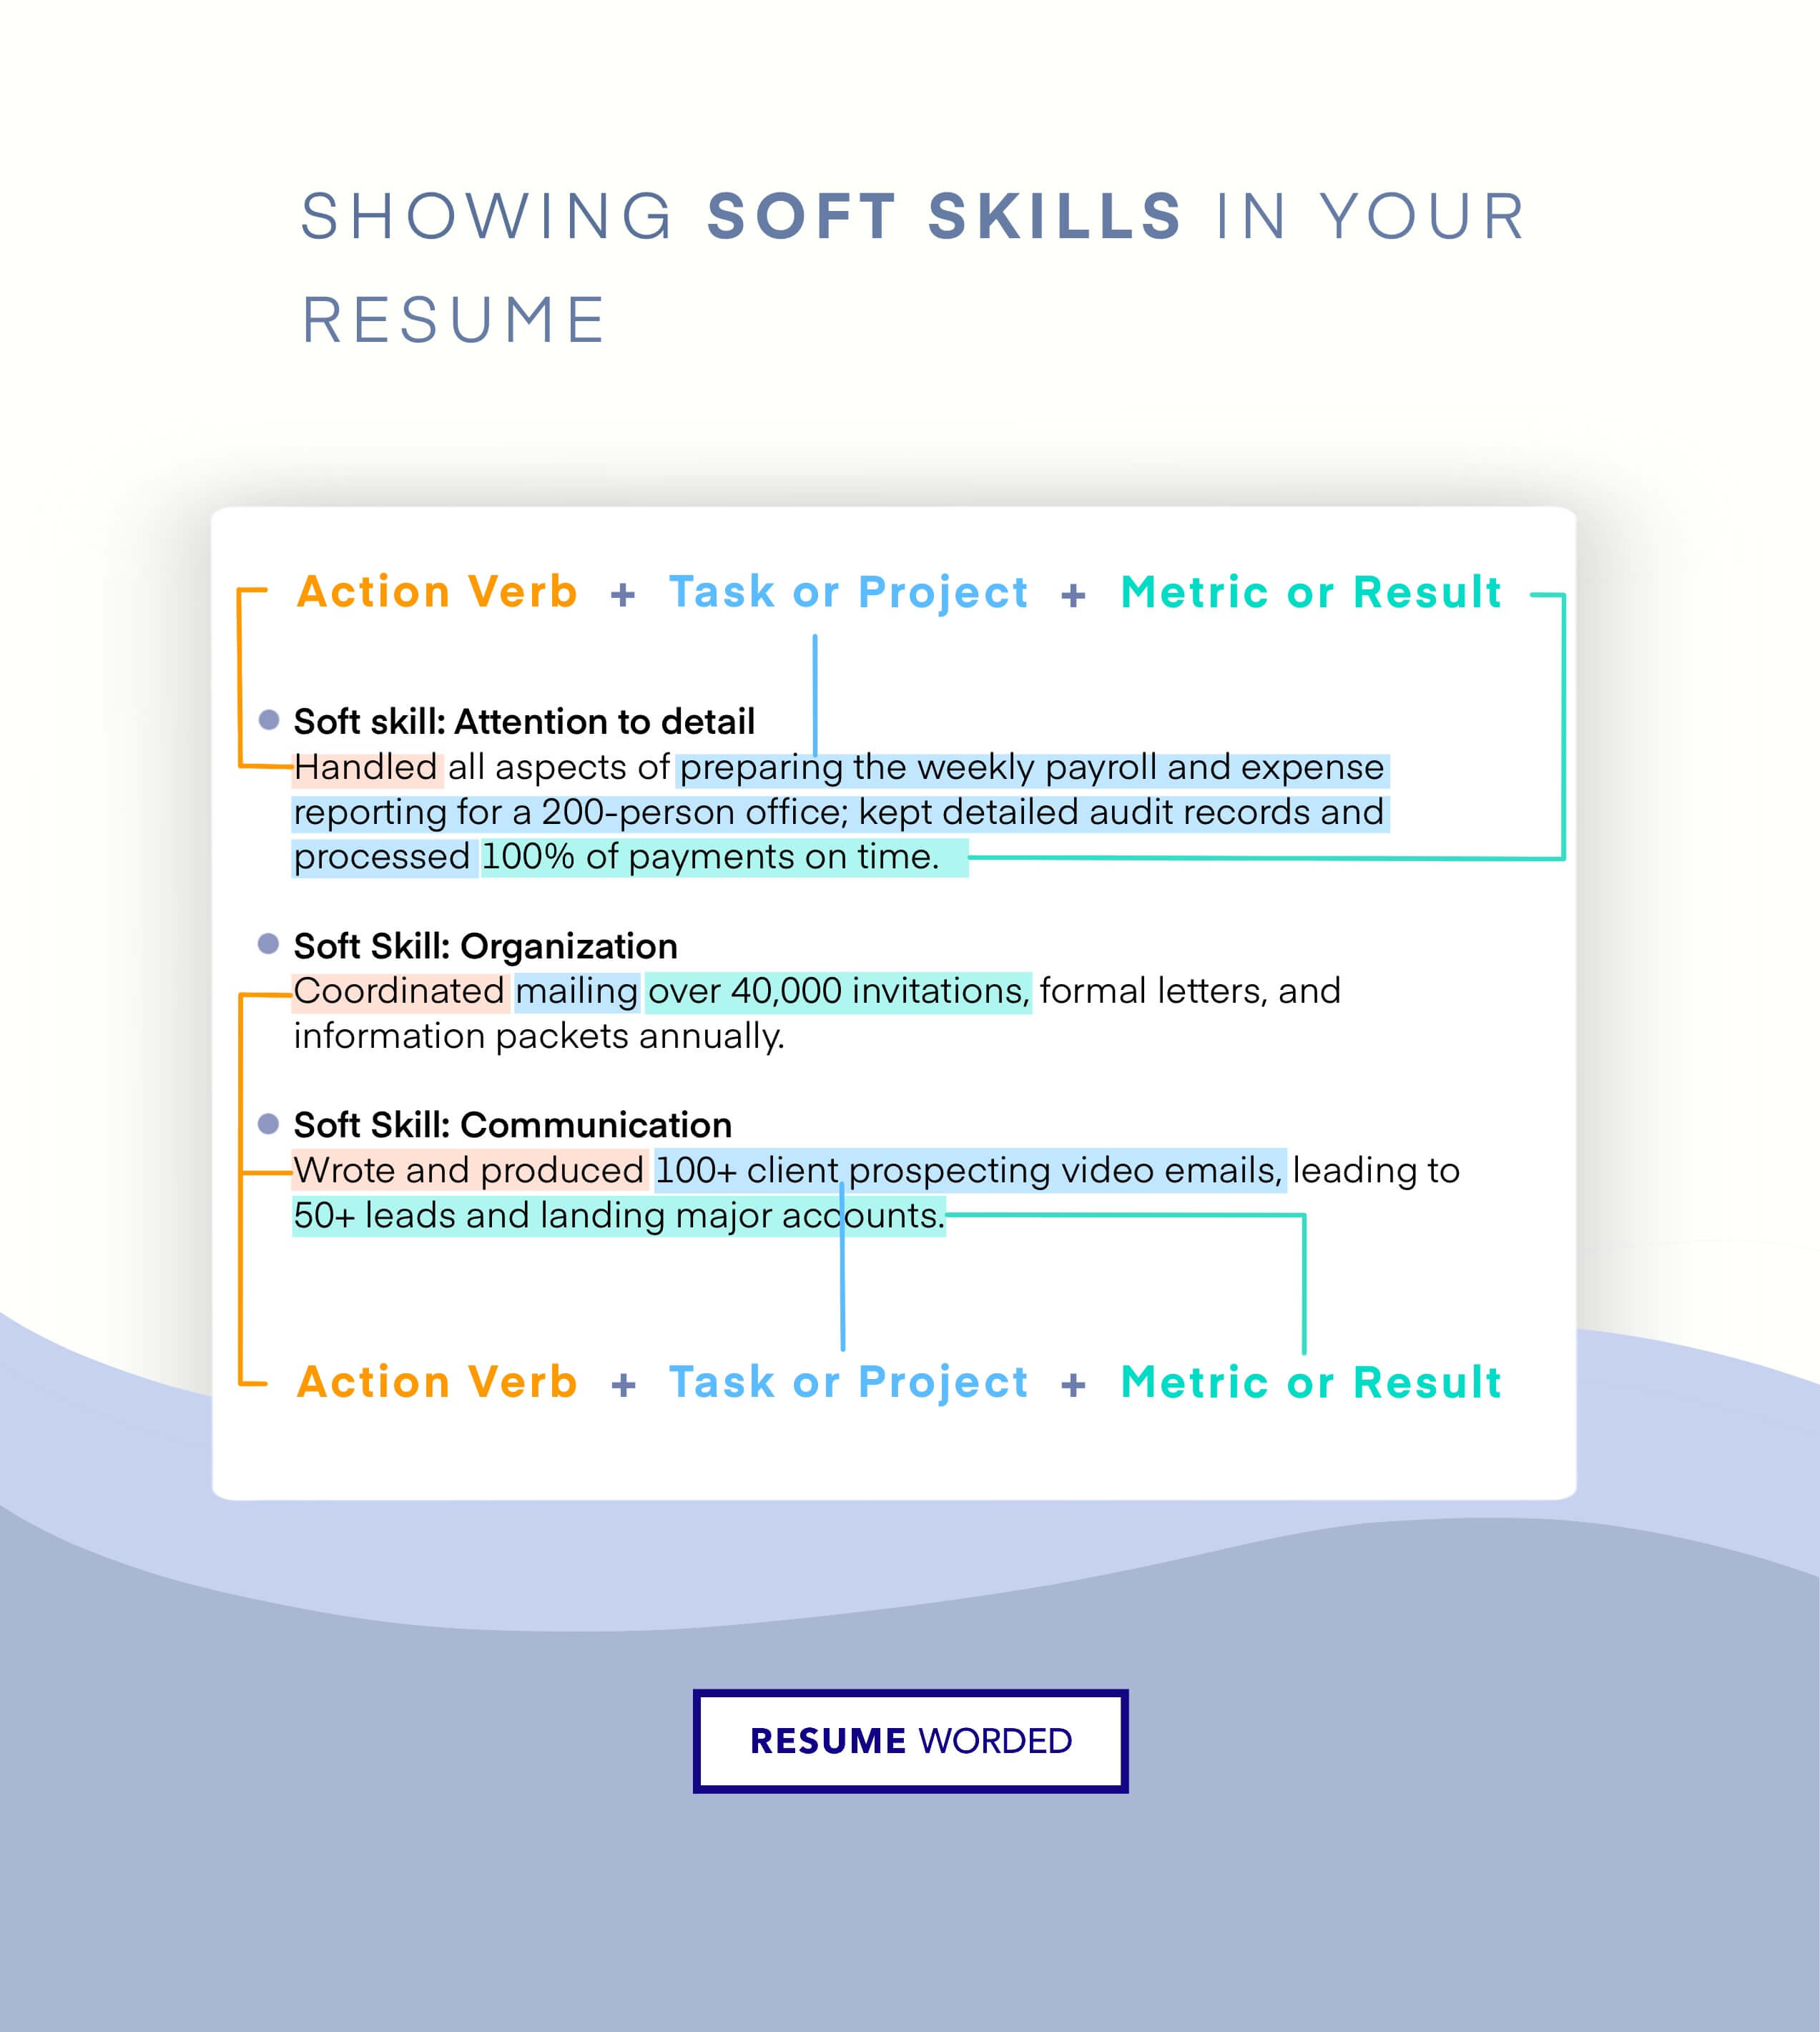 Demonstrates soft skills through accomplishments - Case Manager Resume